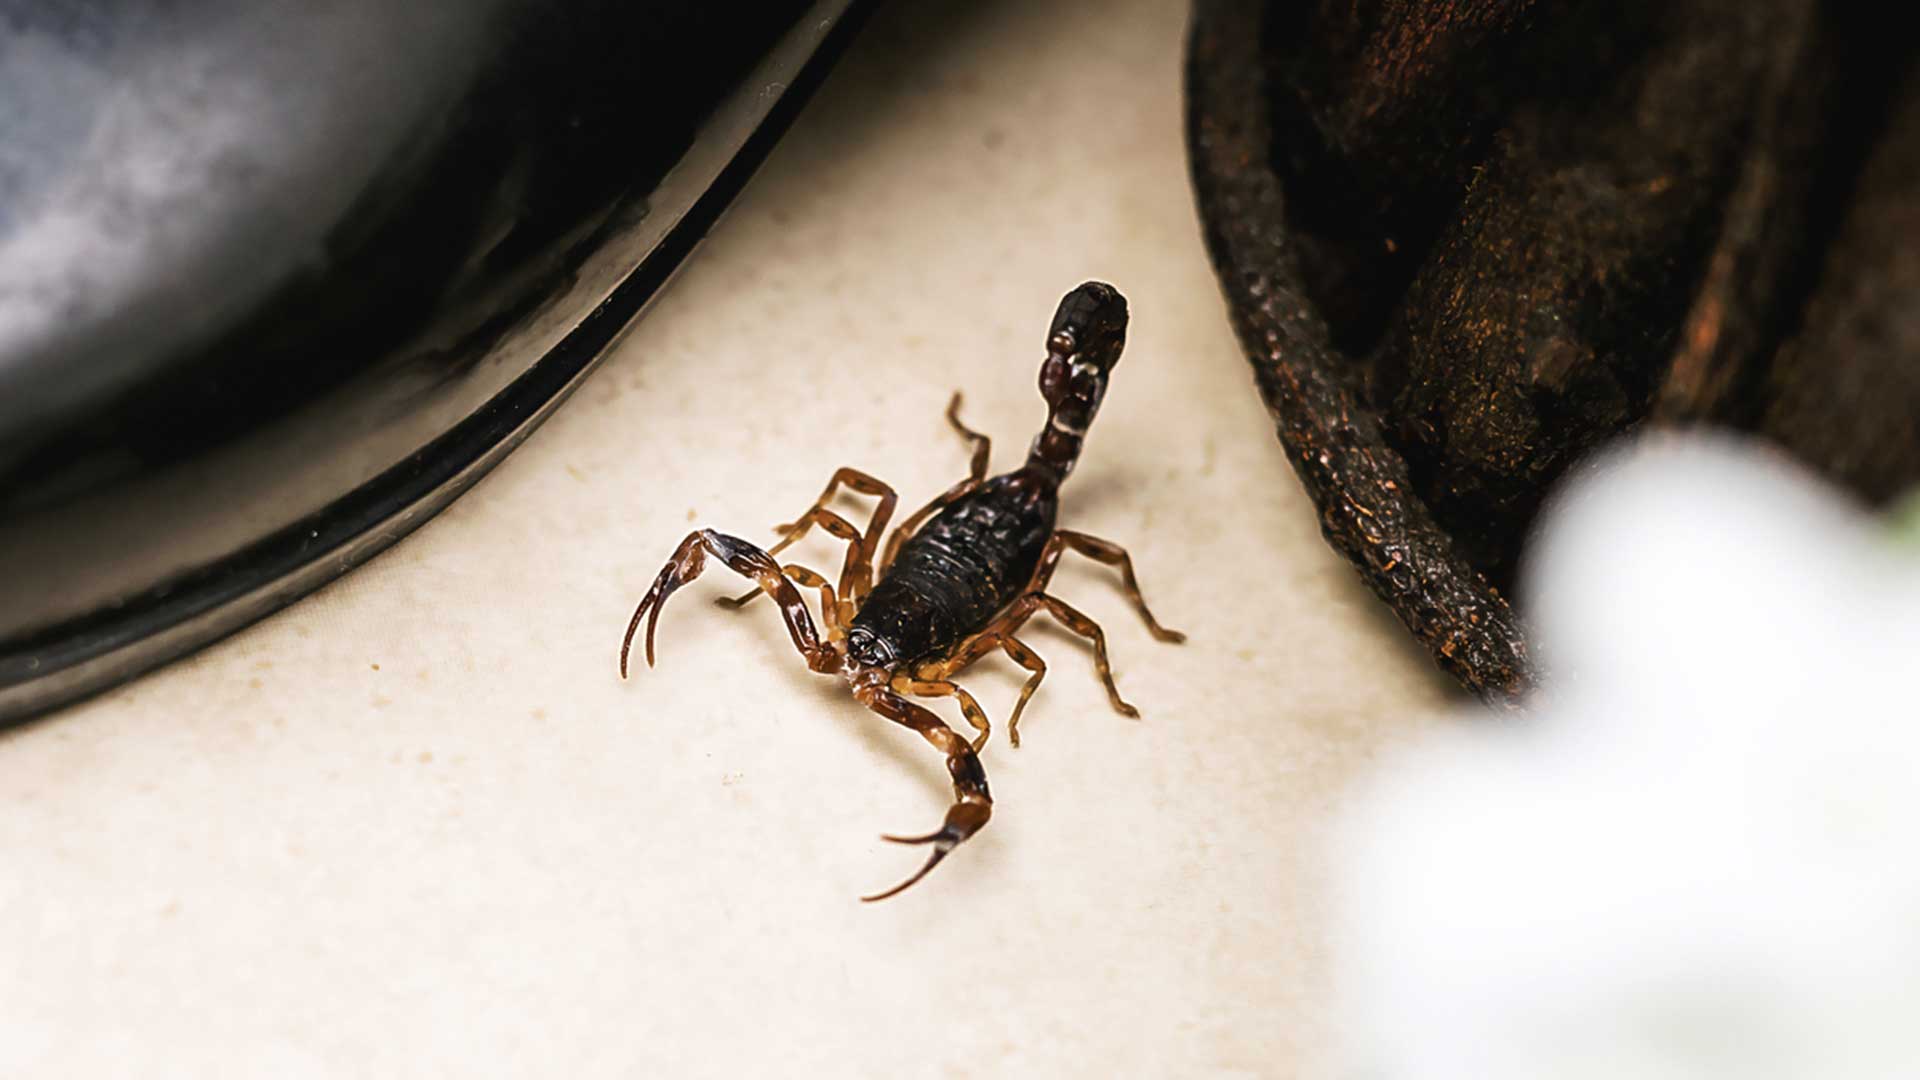 scorpion inside home running between shoes